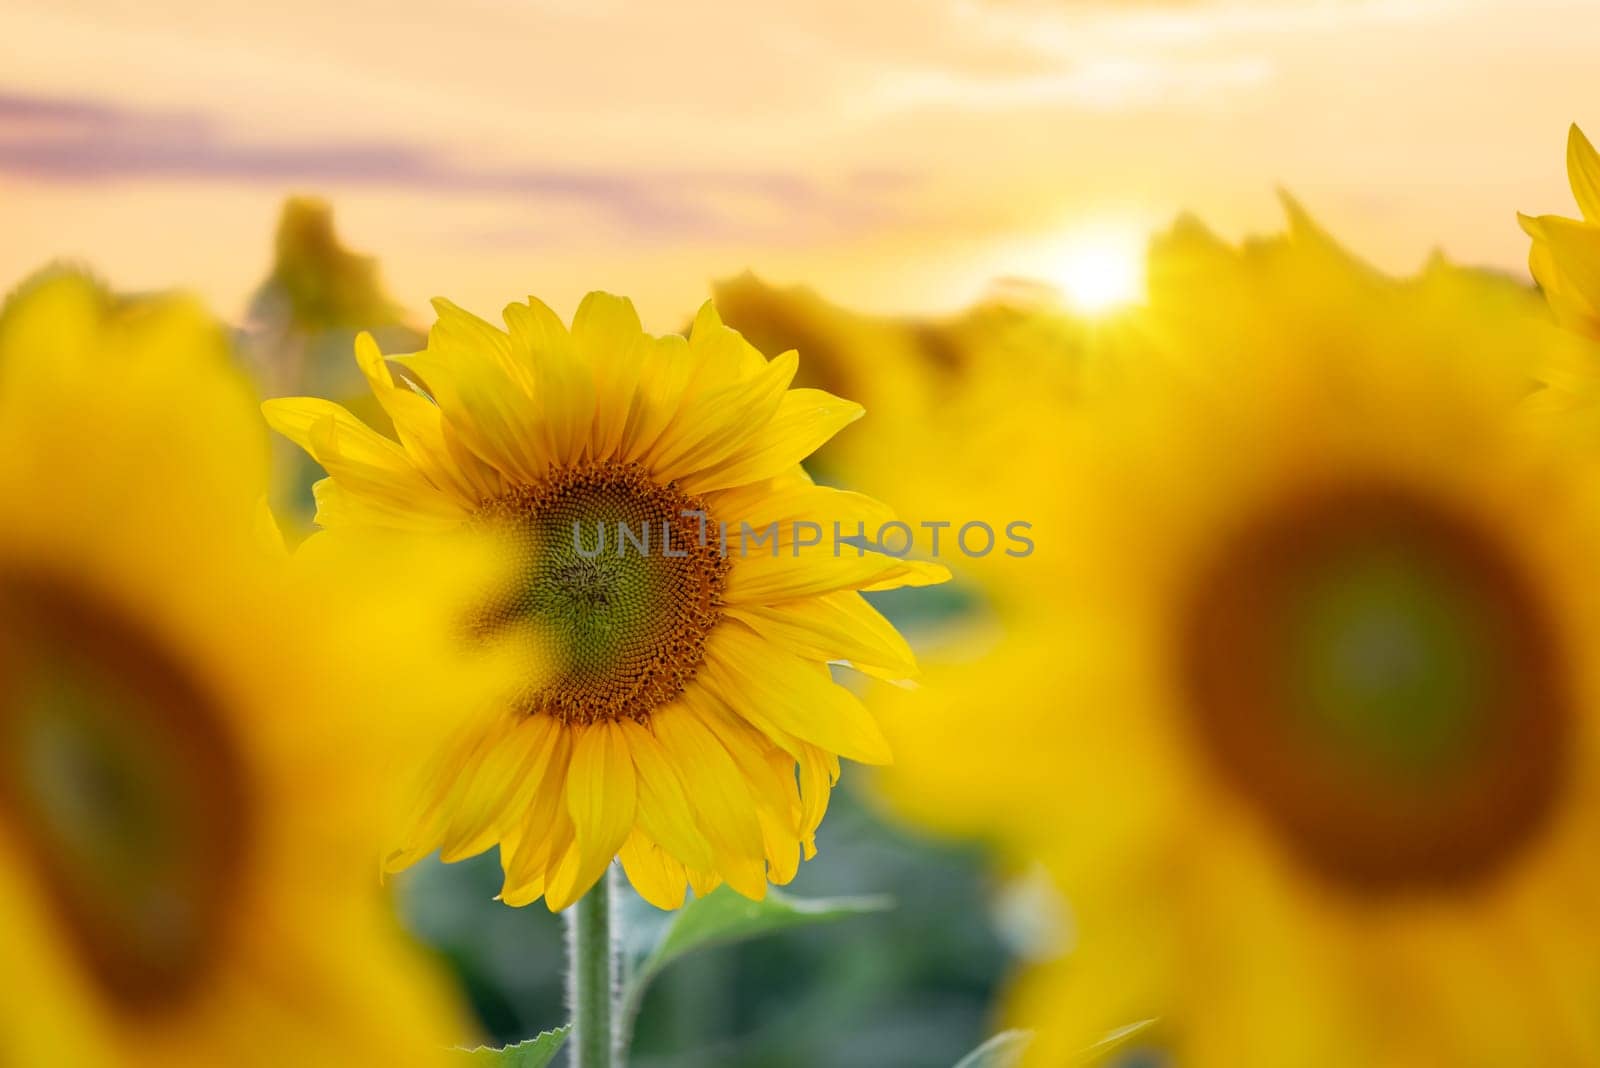 Golden sunset over the field of beautiful yellow sunflowers by VitaliiPetrushenko